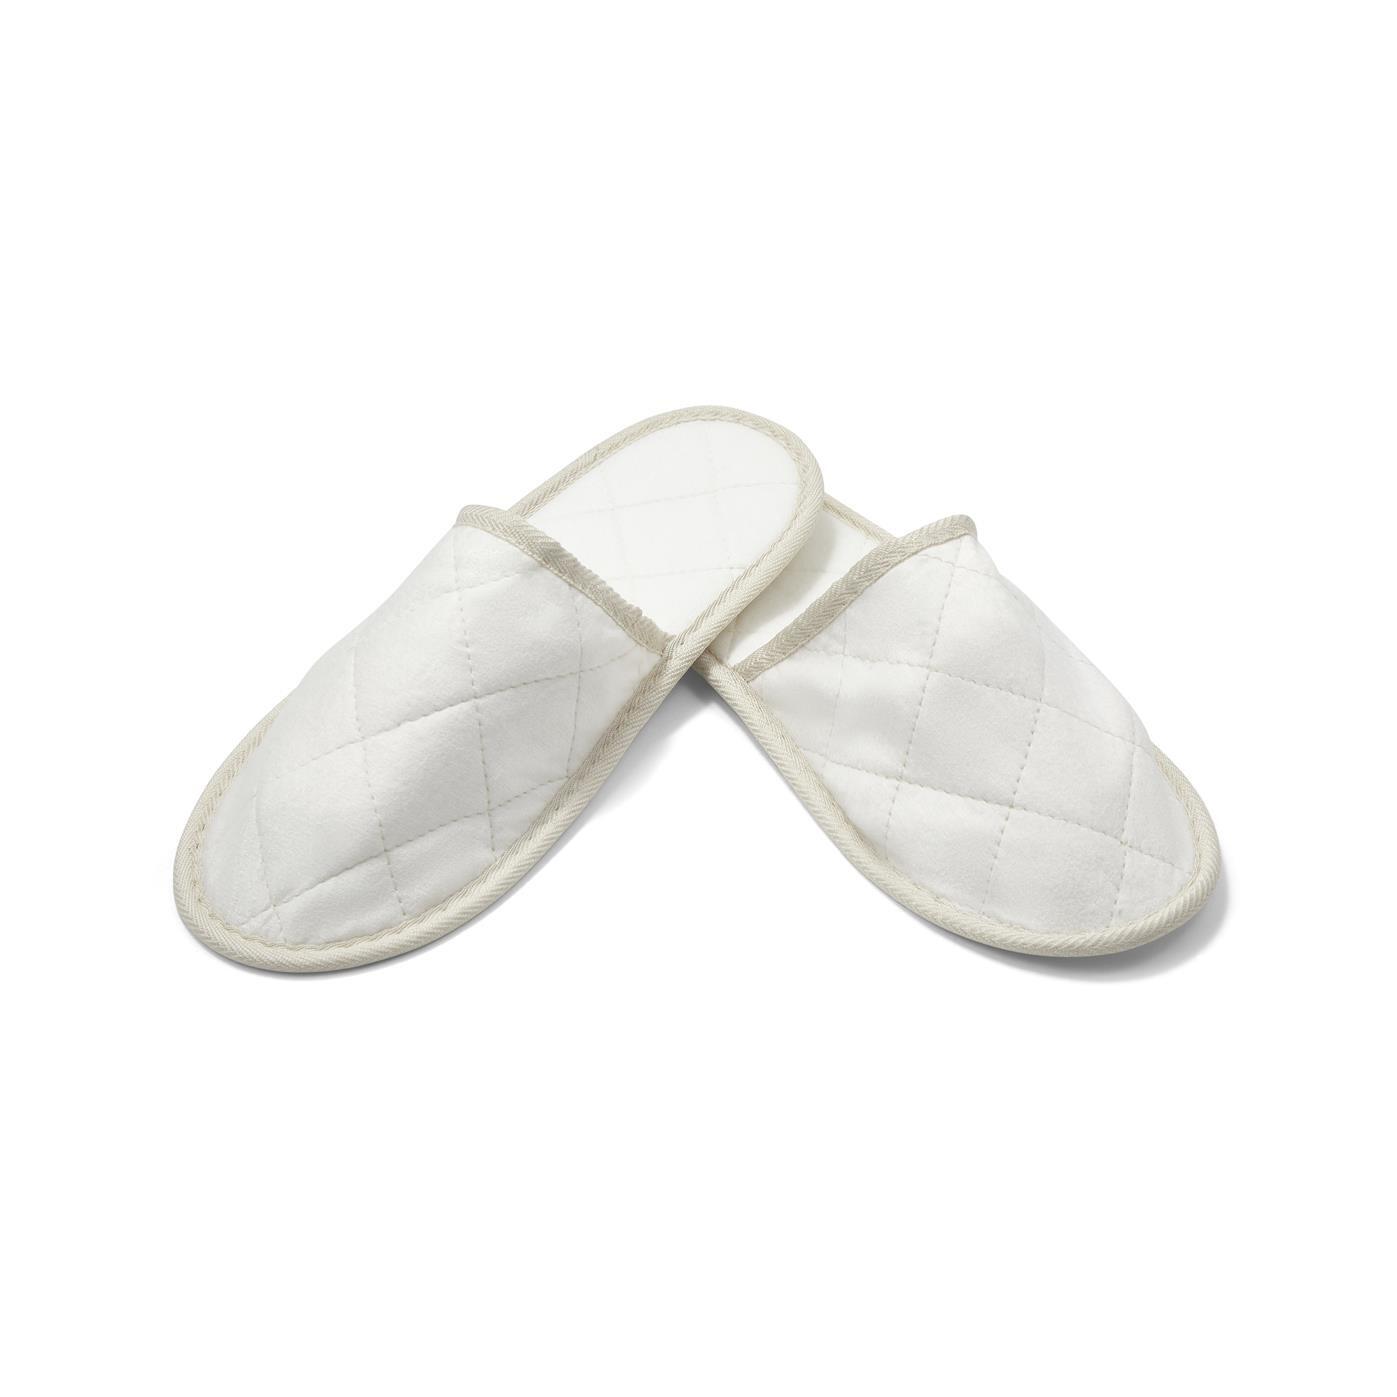 environmentally-friendly hotel spa slippers